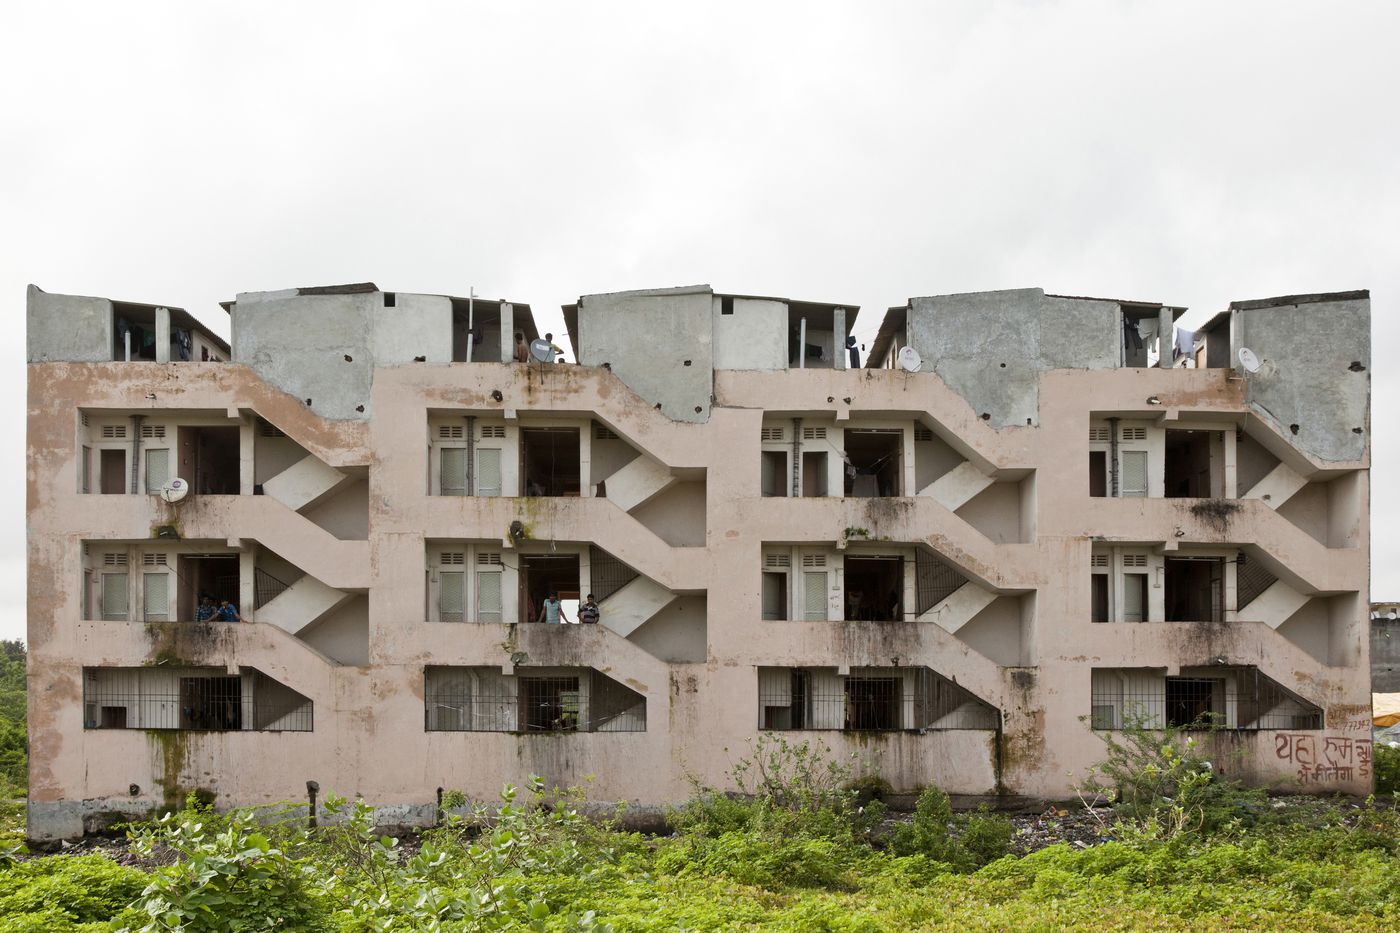 Chawl housing in Surat